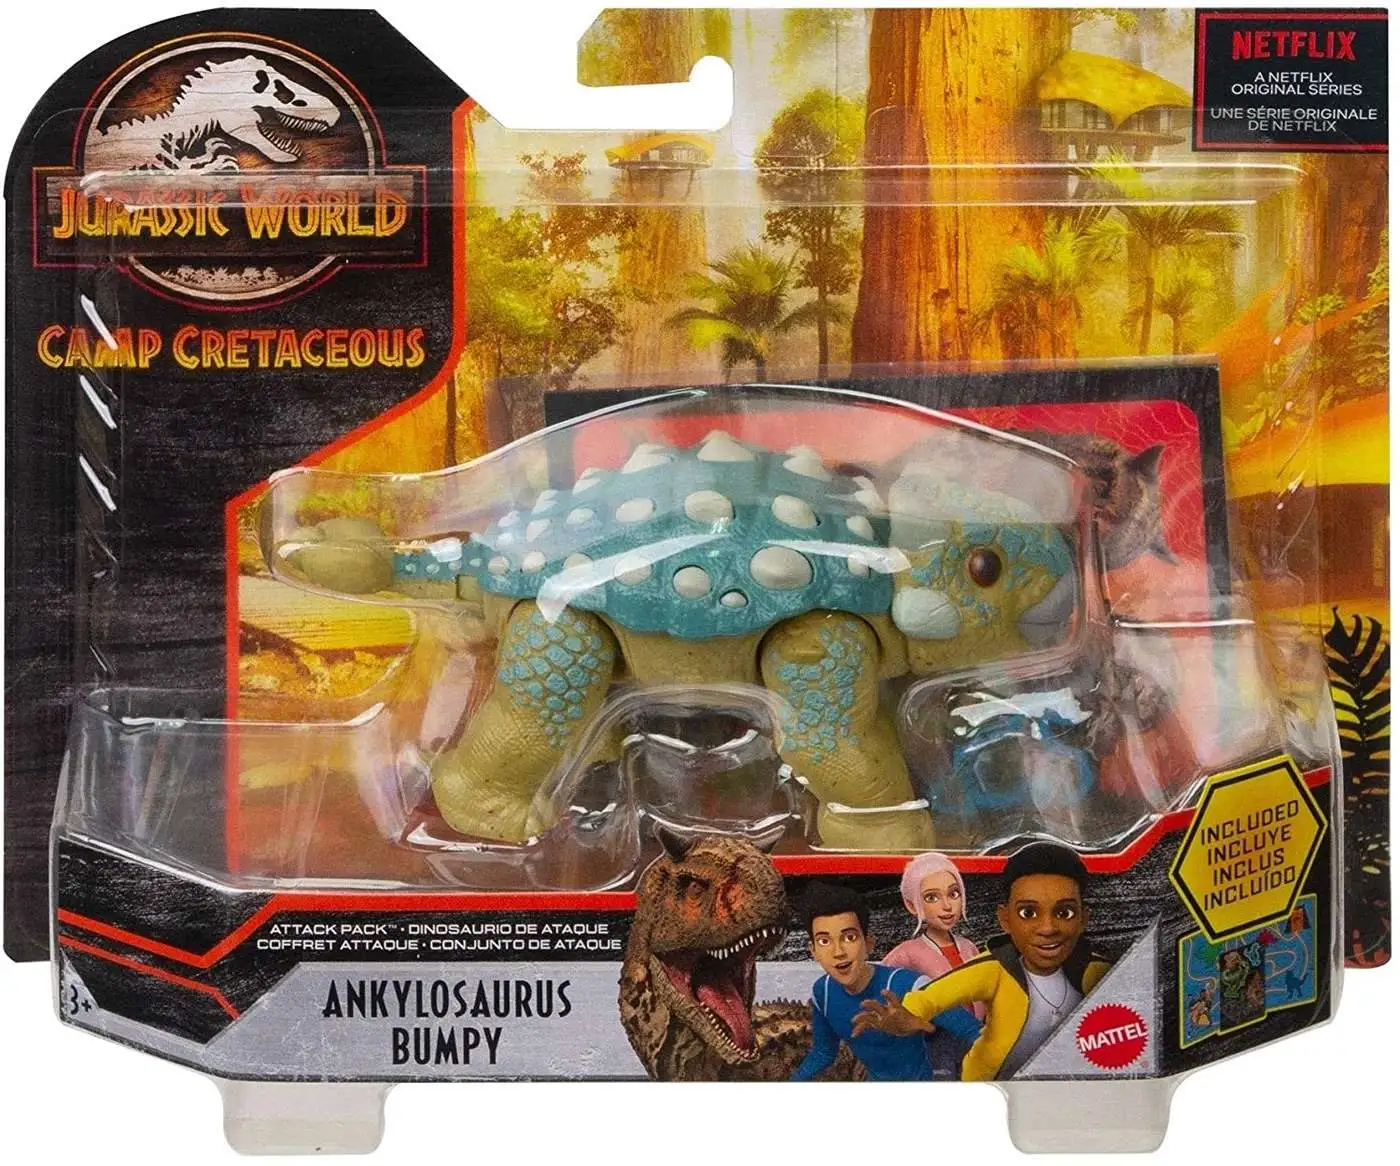 Jurassic World Camp Cretaceous Attack Pack Ankylosaurus Bumpy Action Figure